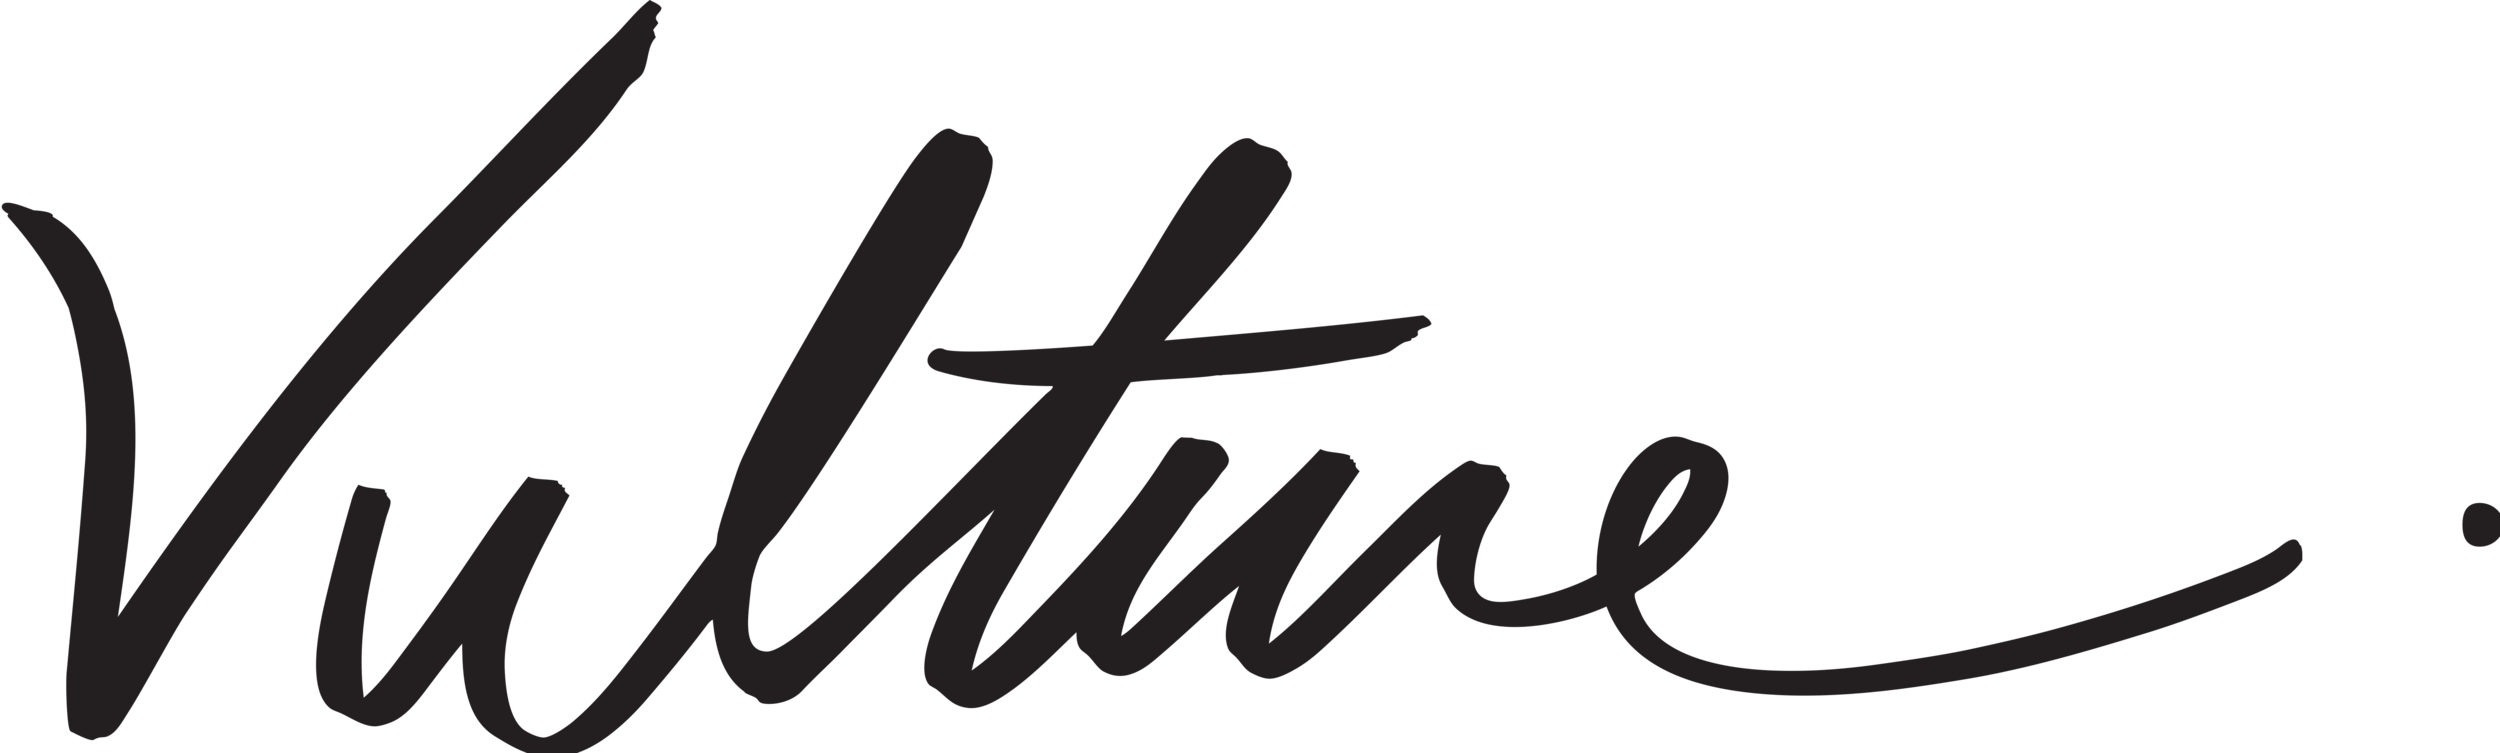 VULTURE - Logo.PNG